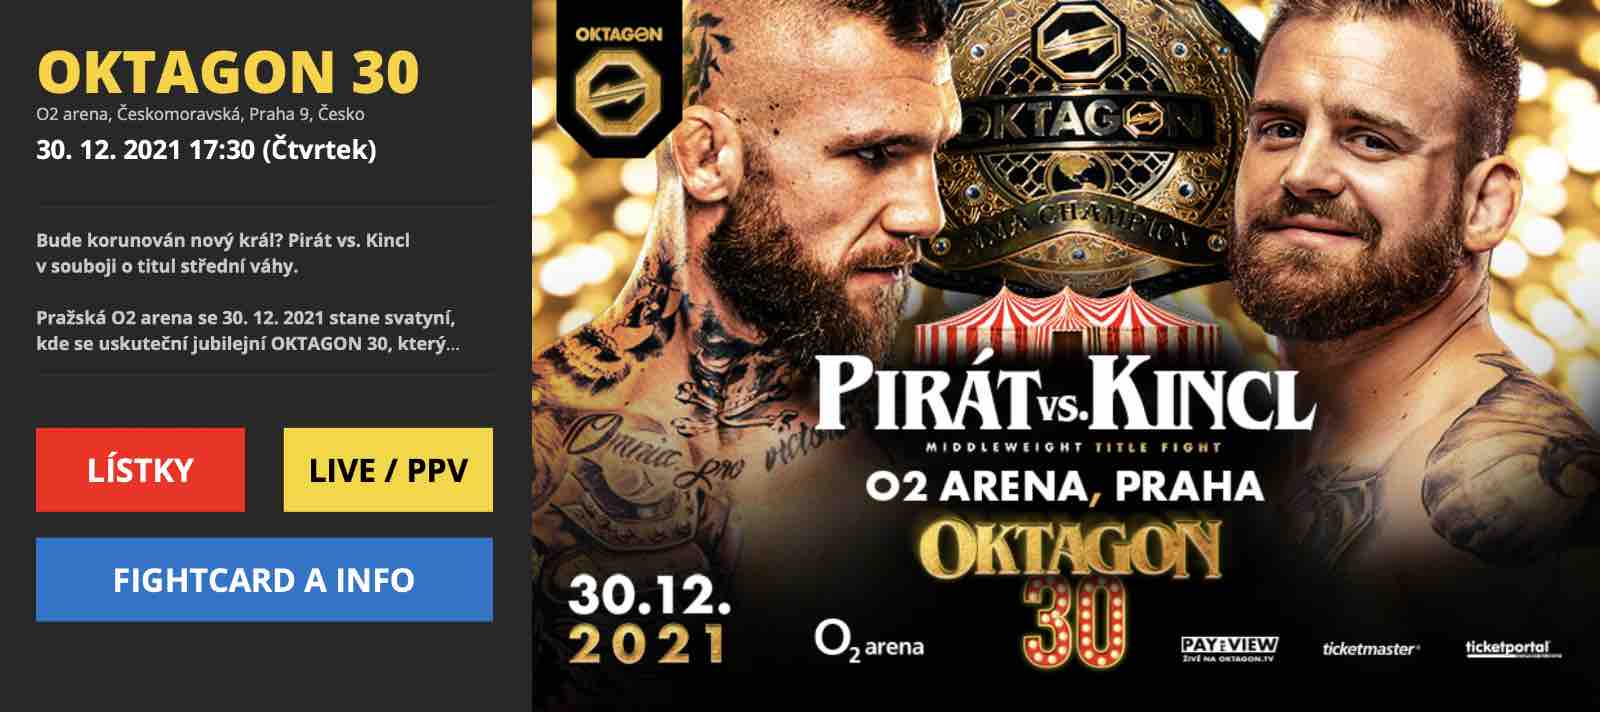 Jak sledovat MMA zápasy OKTAGON 30 online? (Foto: oktagonmma.cz)